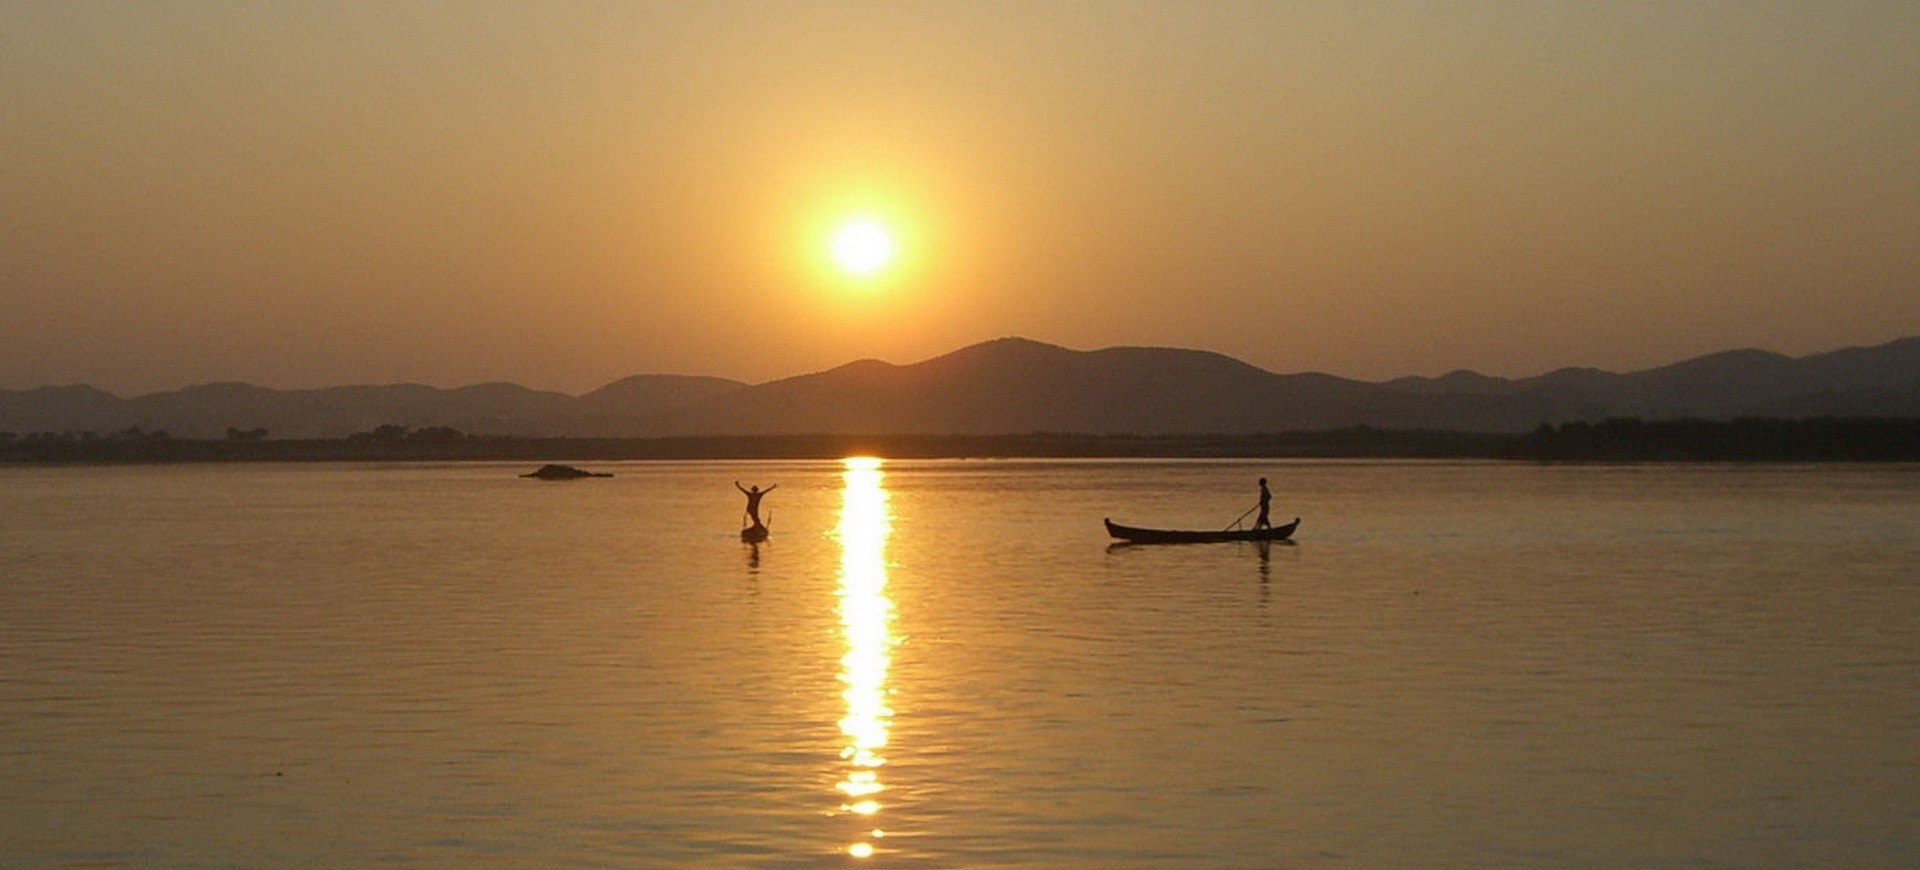 Birmanie Lac Inlé coucher du soleil